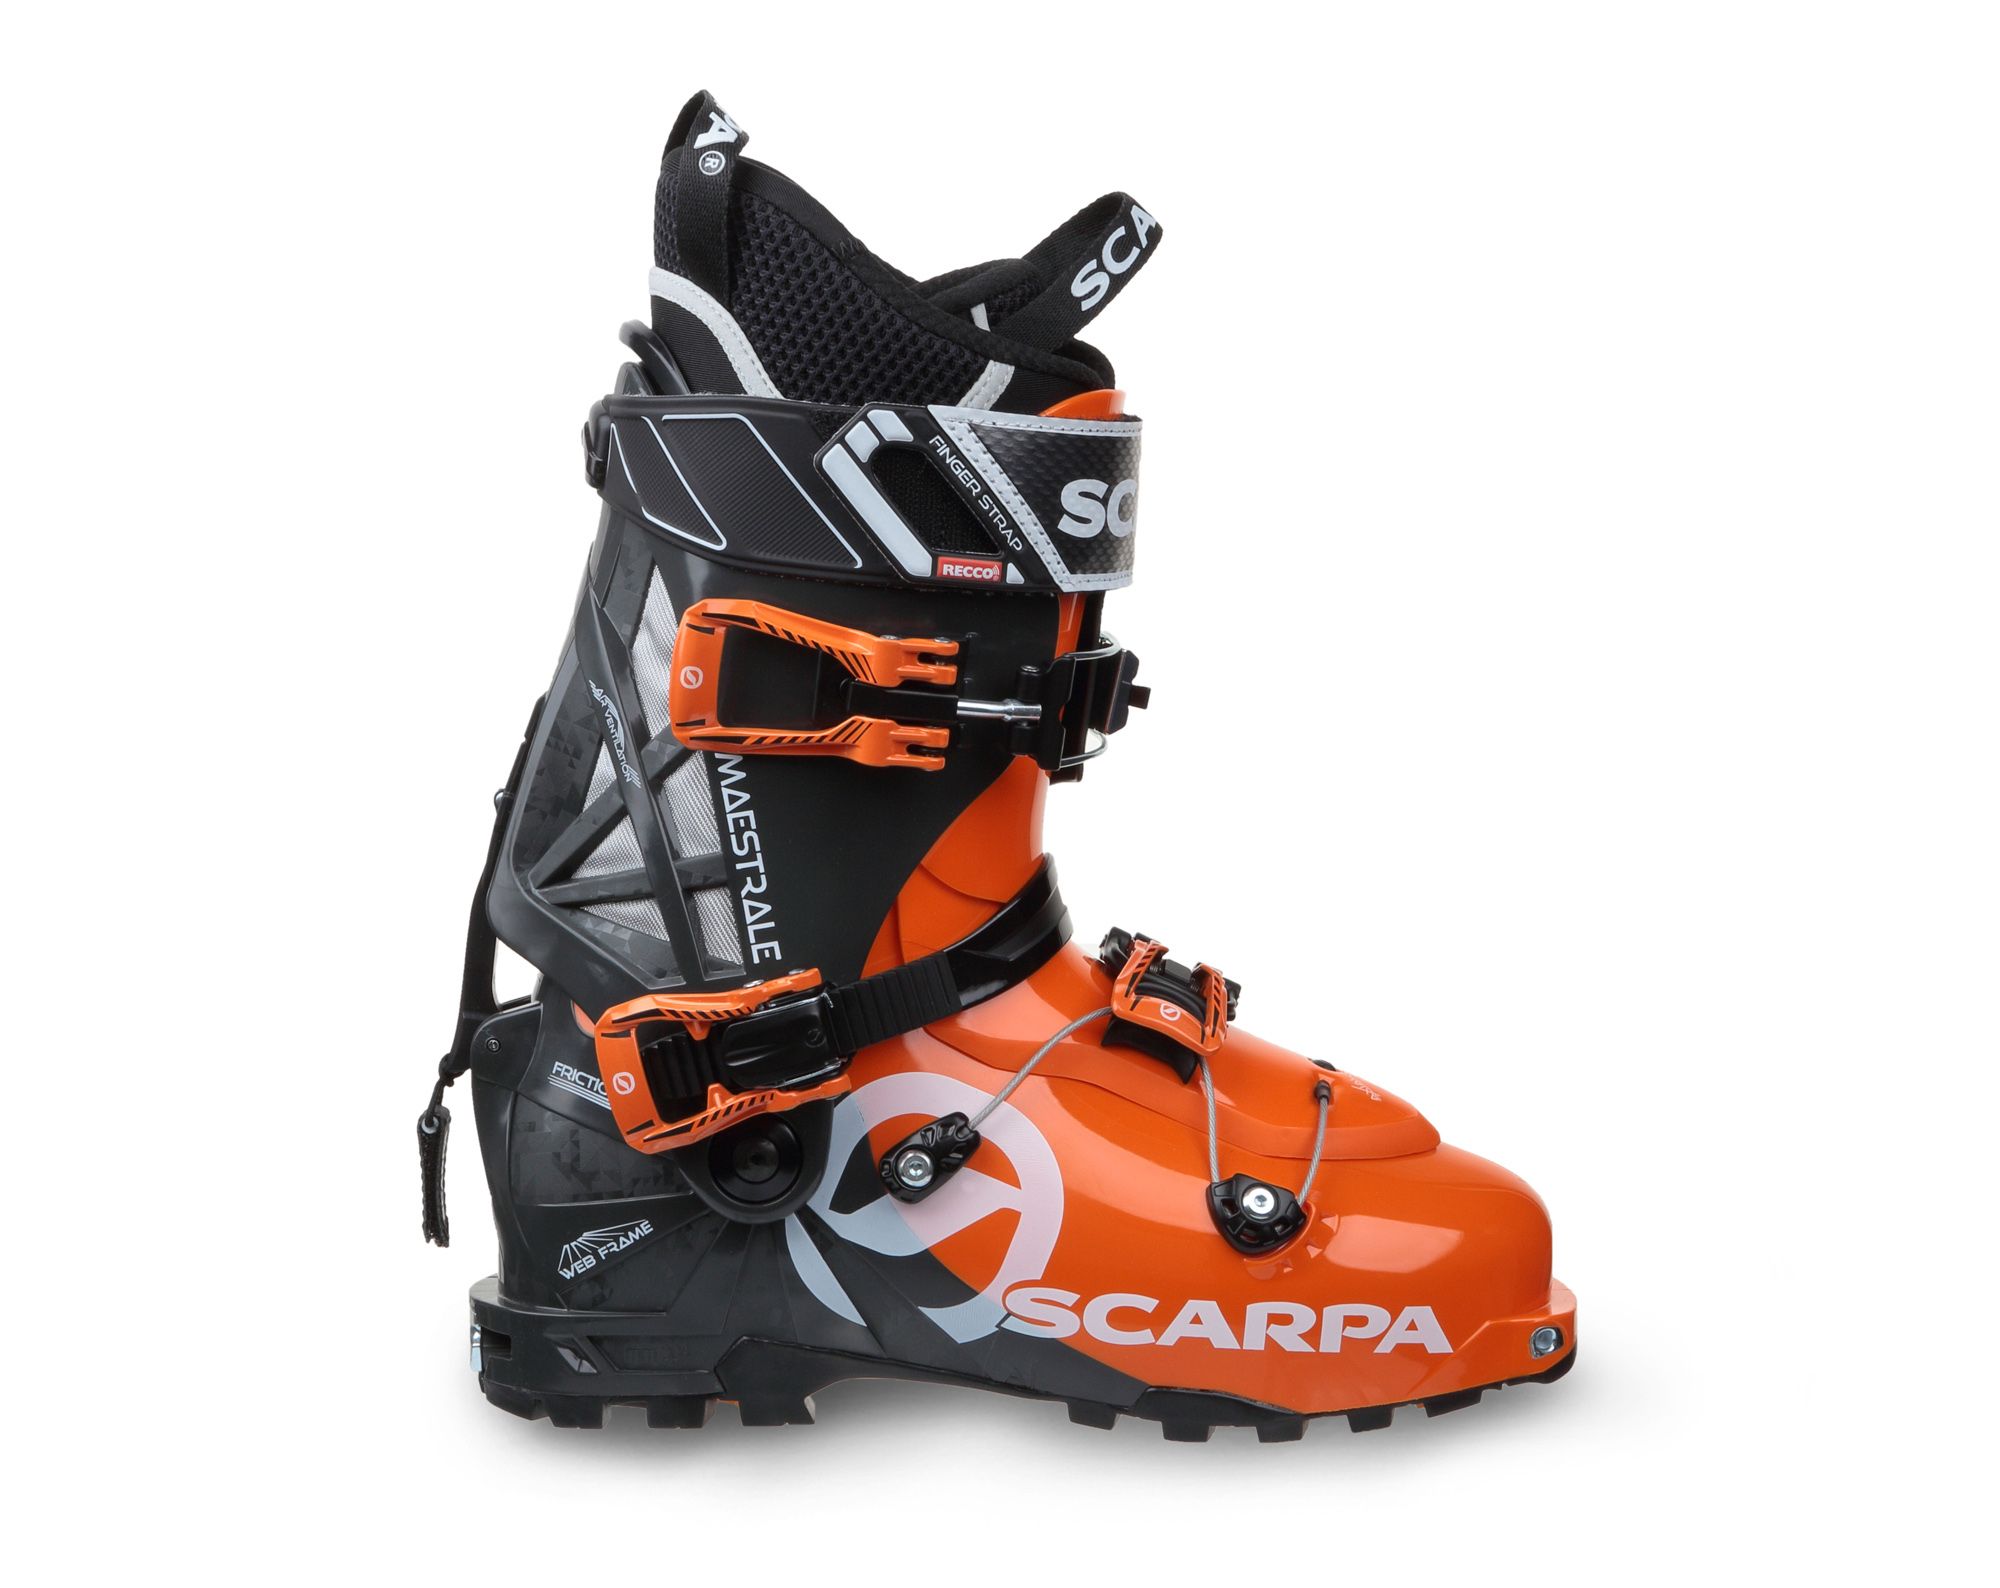 Scarpa - Maestrale - Ski boots - Men's